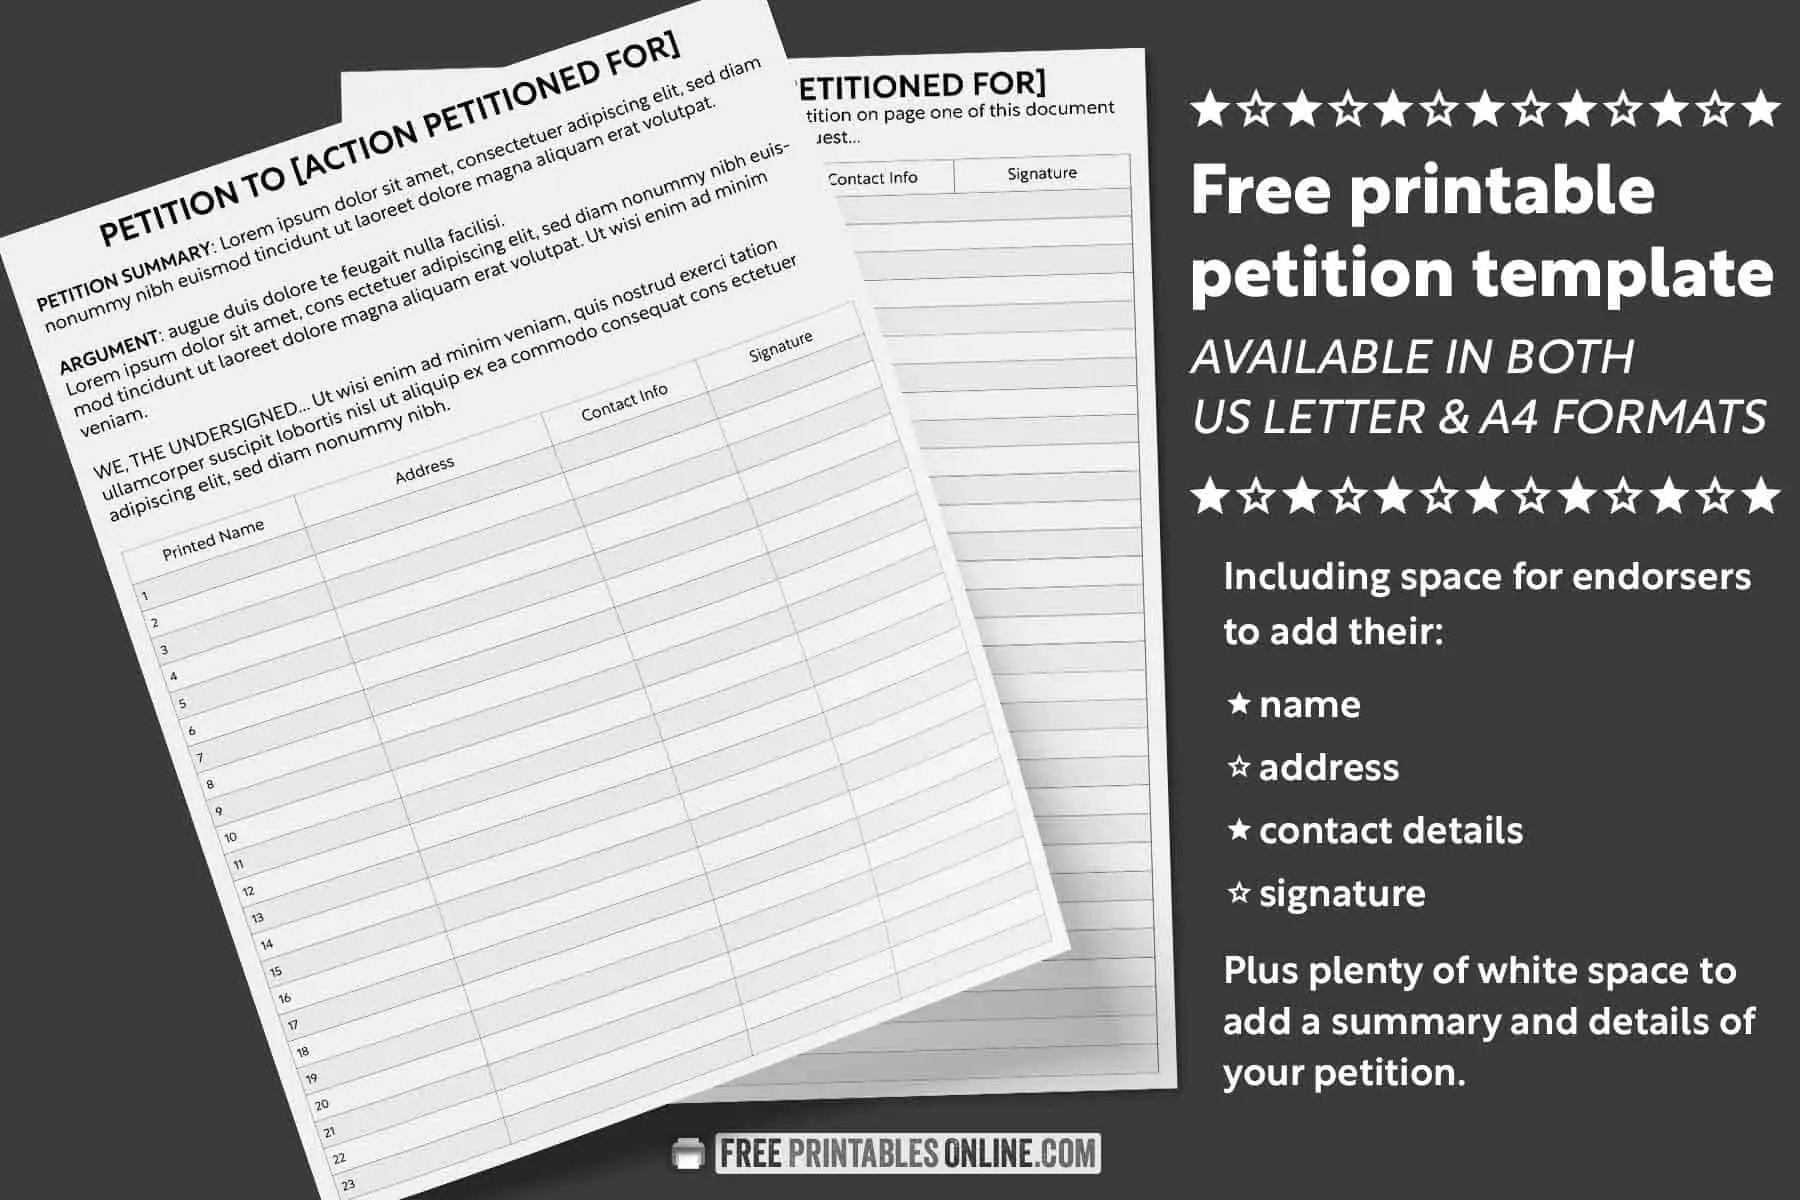 free-printable-petition-template-laptrinhx-news